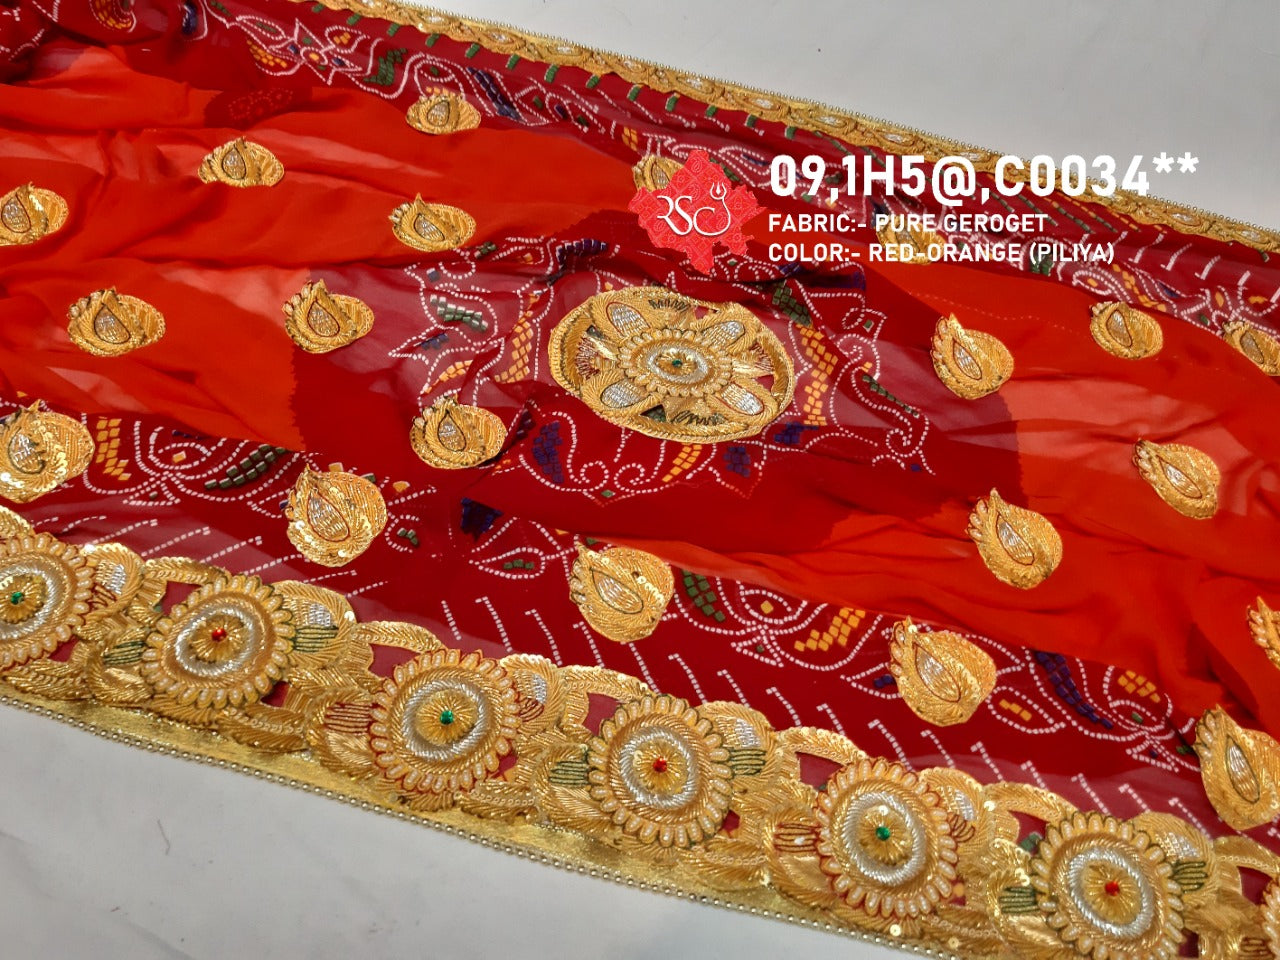 Jaipuri Special Rajasthani Chundi Odhana Full Size Or Kc Piliya (Pure Georgette Fabric) Chunri Pila